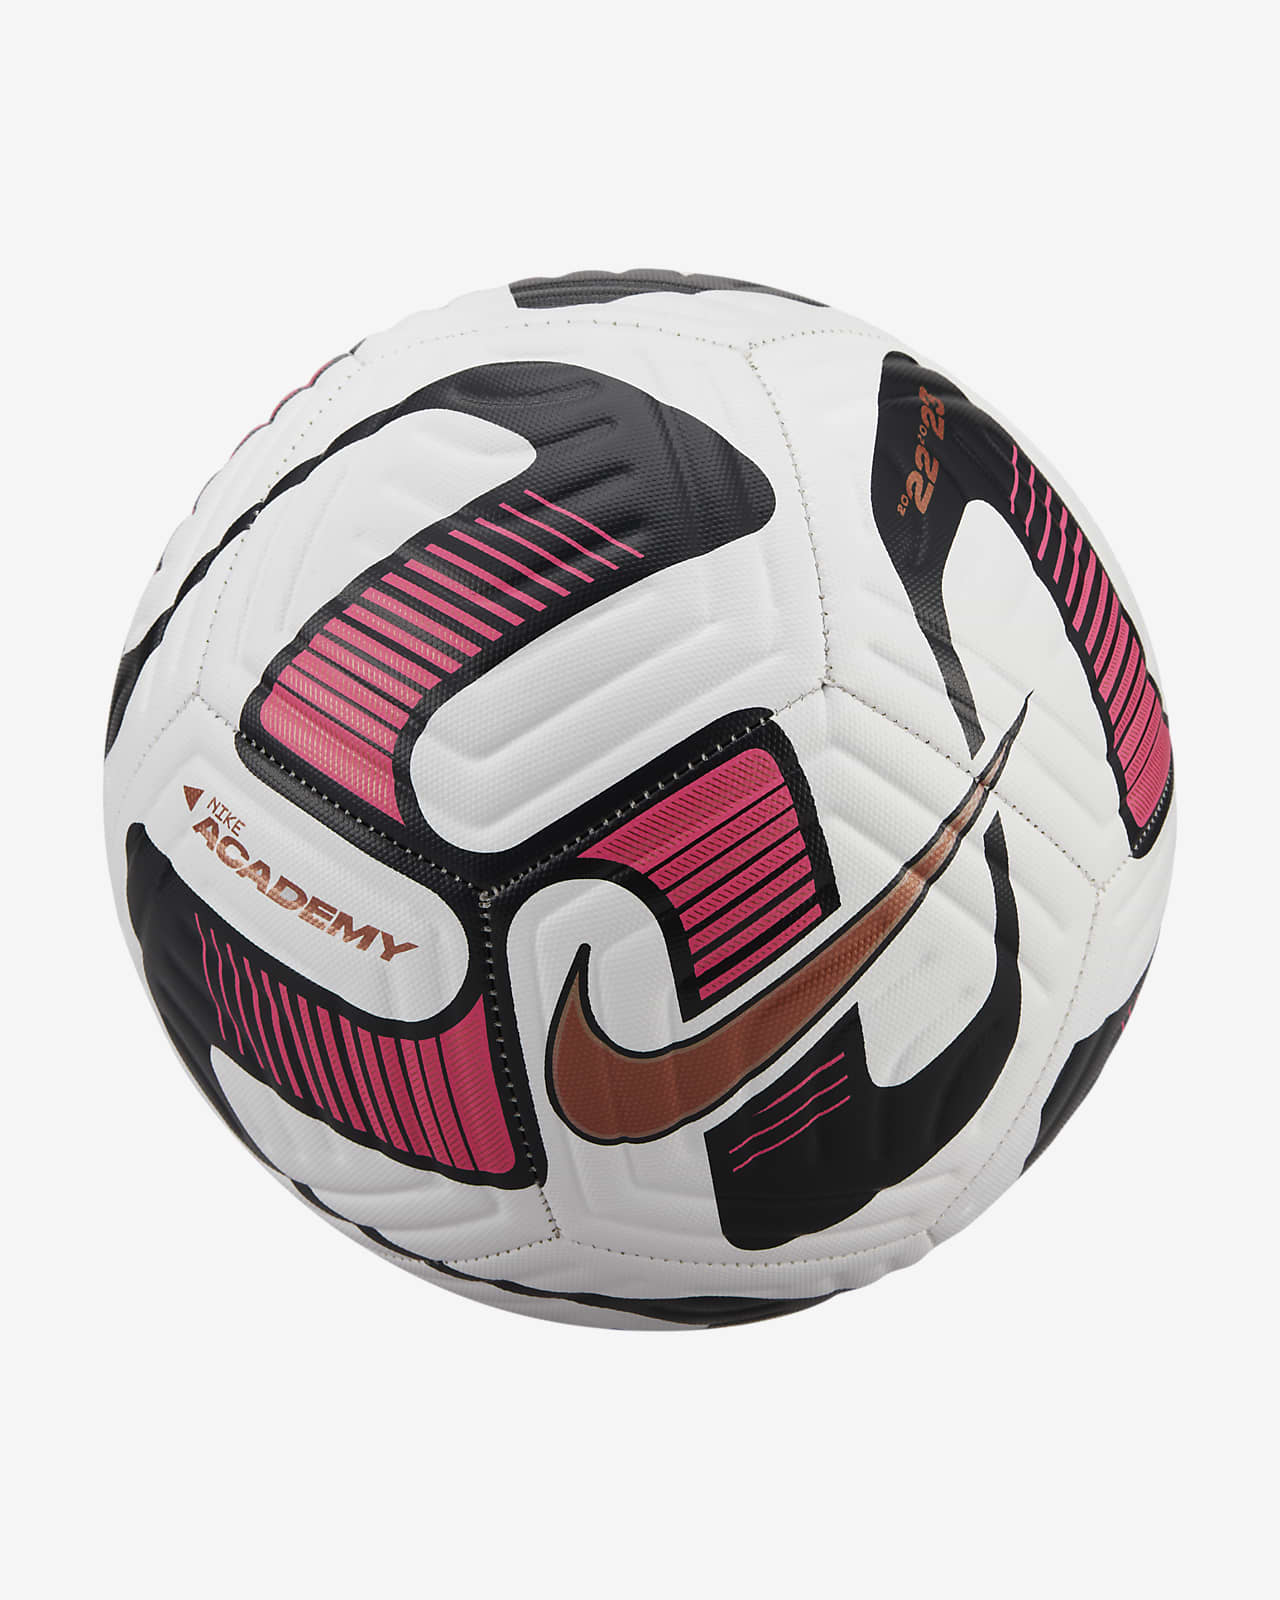 Presunto juego De acuerdo con Nike Academy Balón de fútbol. Nike ES